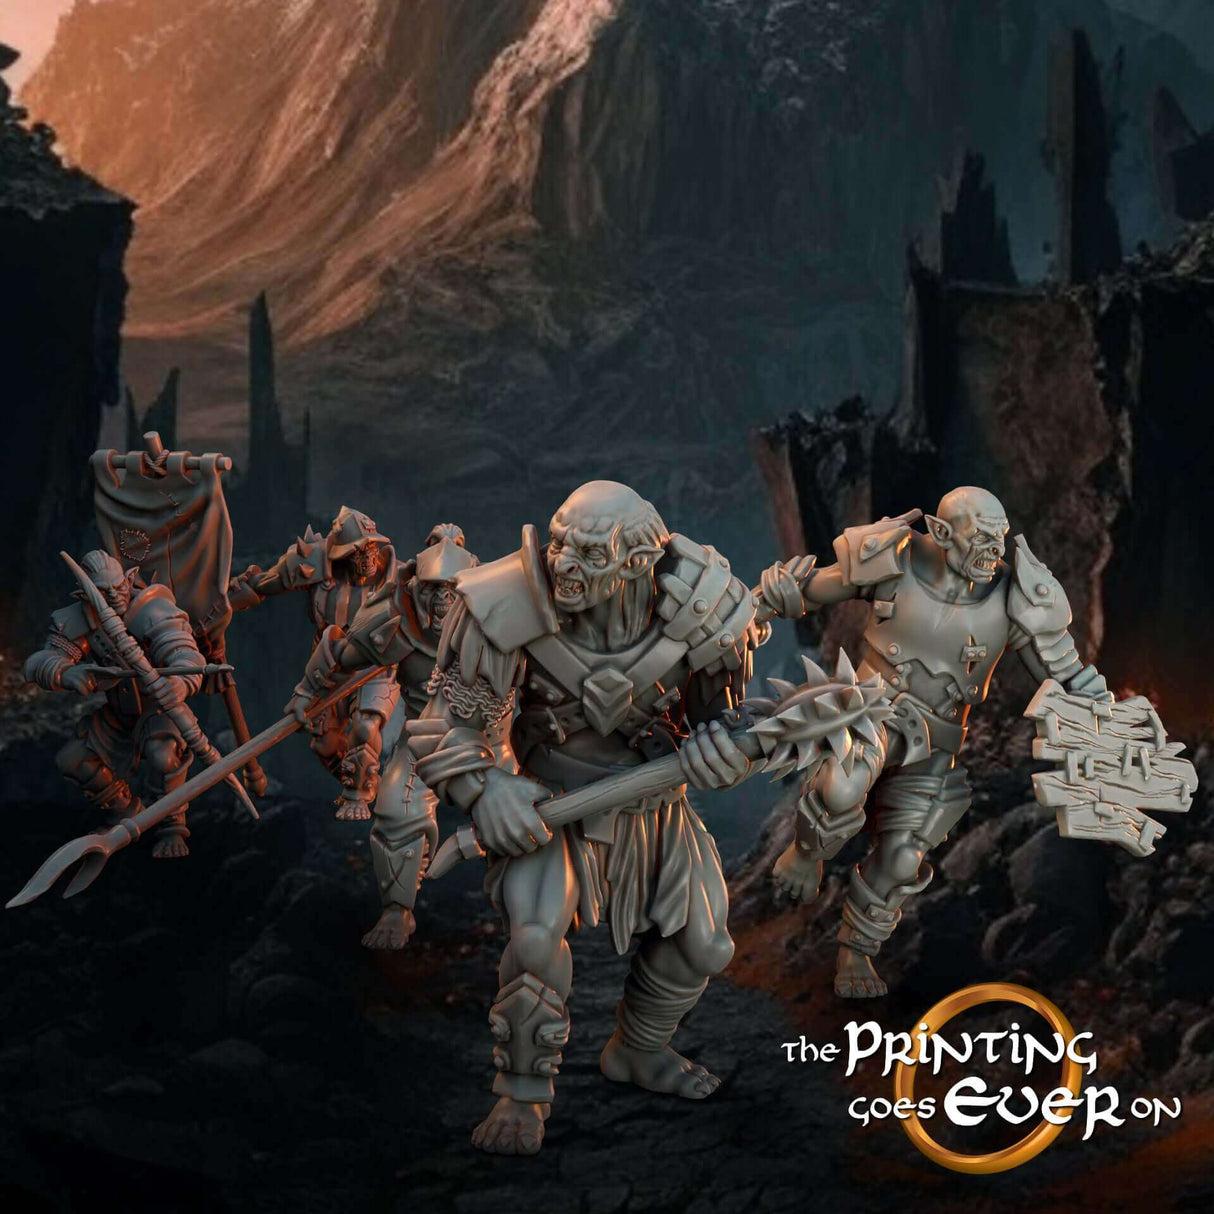 Assault Orcs Gruppenbild: Eine epische Zusammenstellung aller Assault Orcs, bereit, in den Schlachtgetümmel zu stürzen.